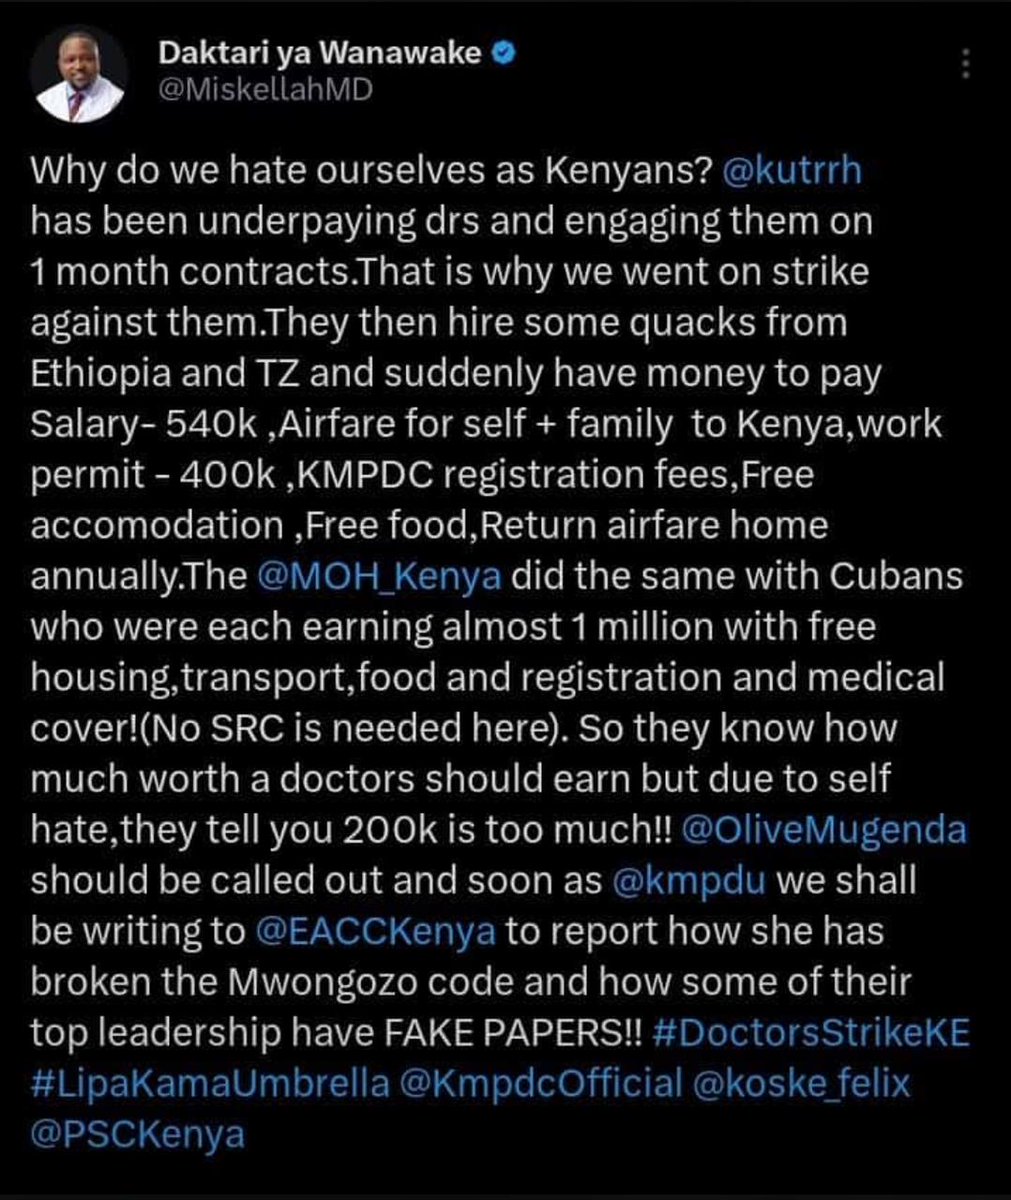 #DoctorsStrikeKE #ImplementCBA #PostMedicalInterns #PayResidentDoctors #SupportKenyanDoctors @Nakhumicha_S 
@WilliamsRuto